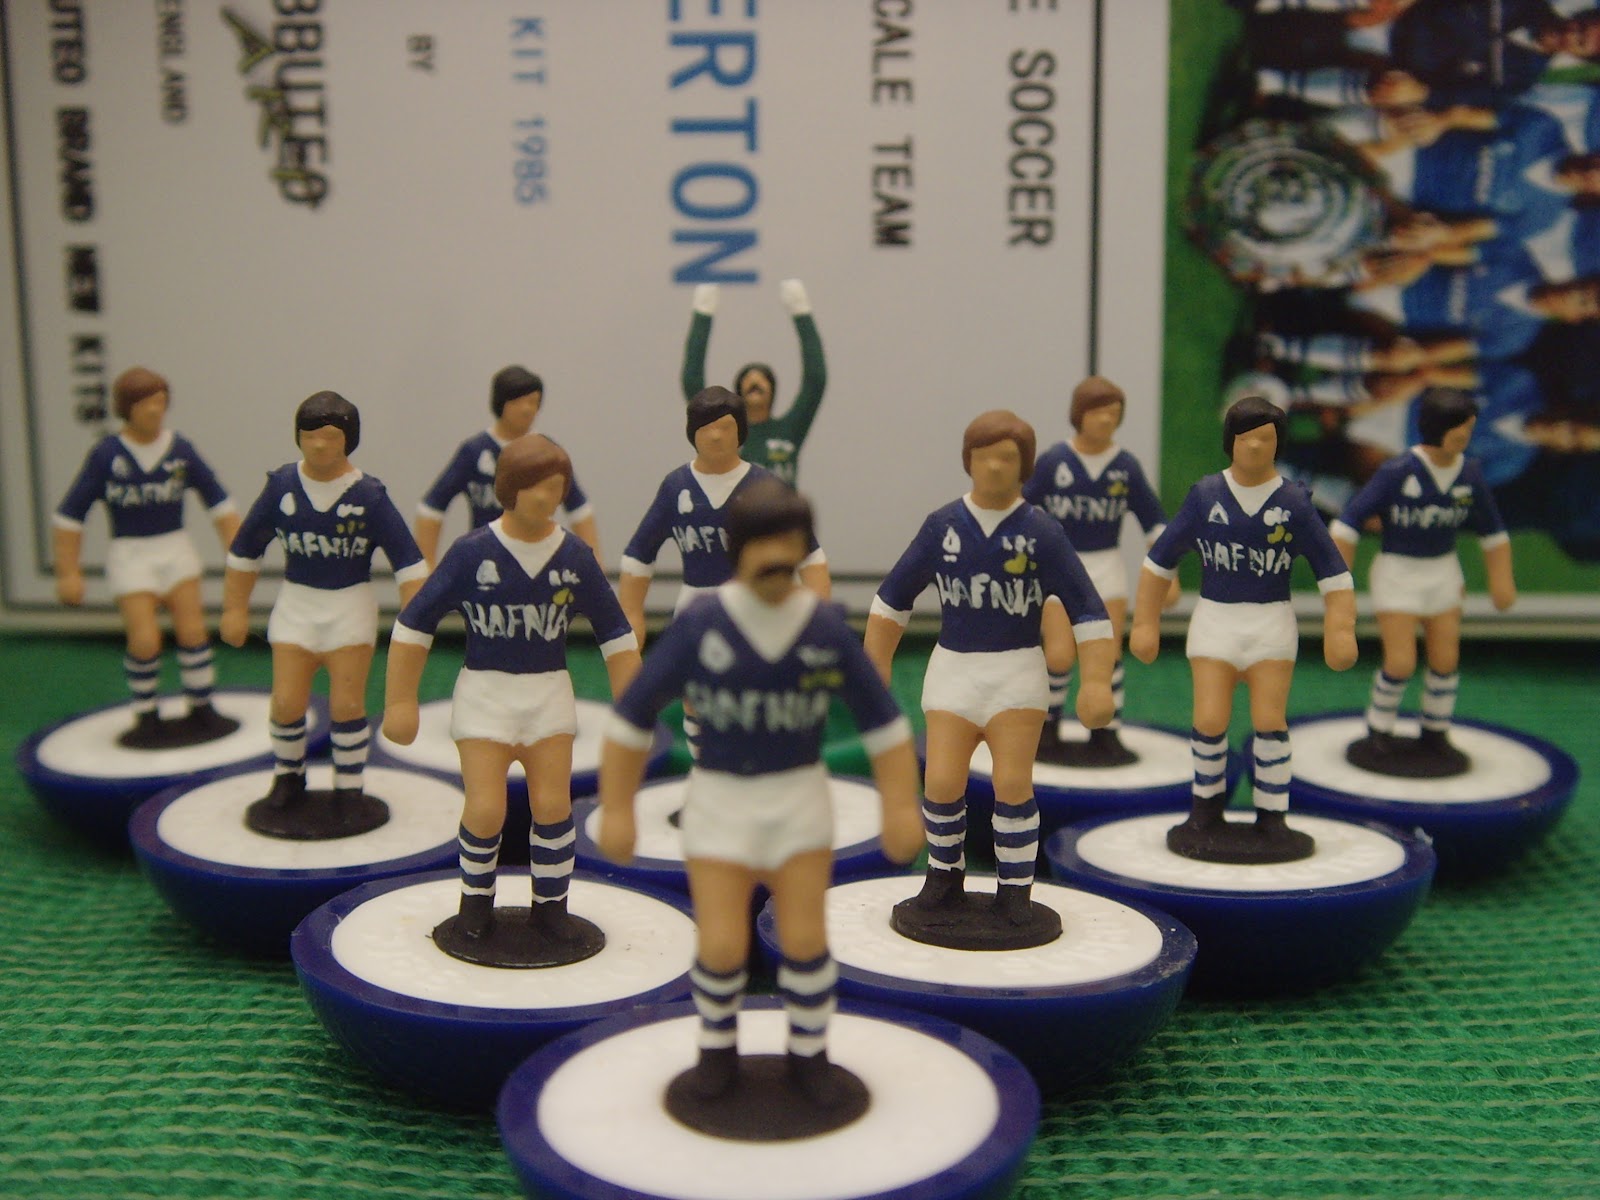 Everton+Home+Kit+1985+-+On+Pitch.JPG